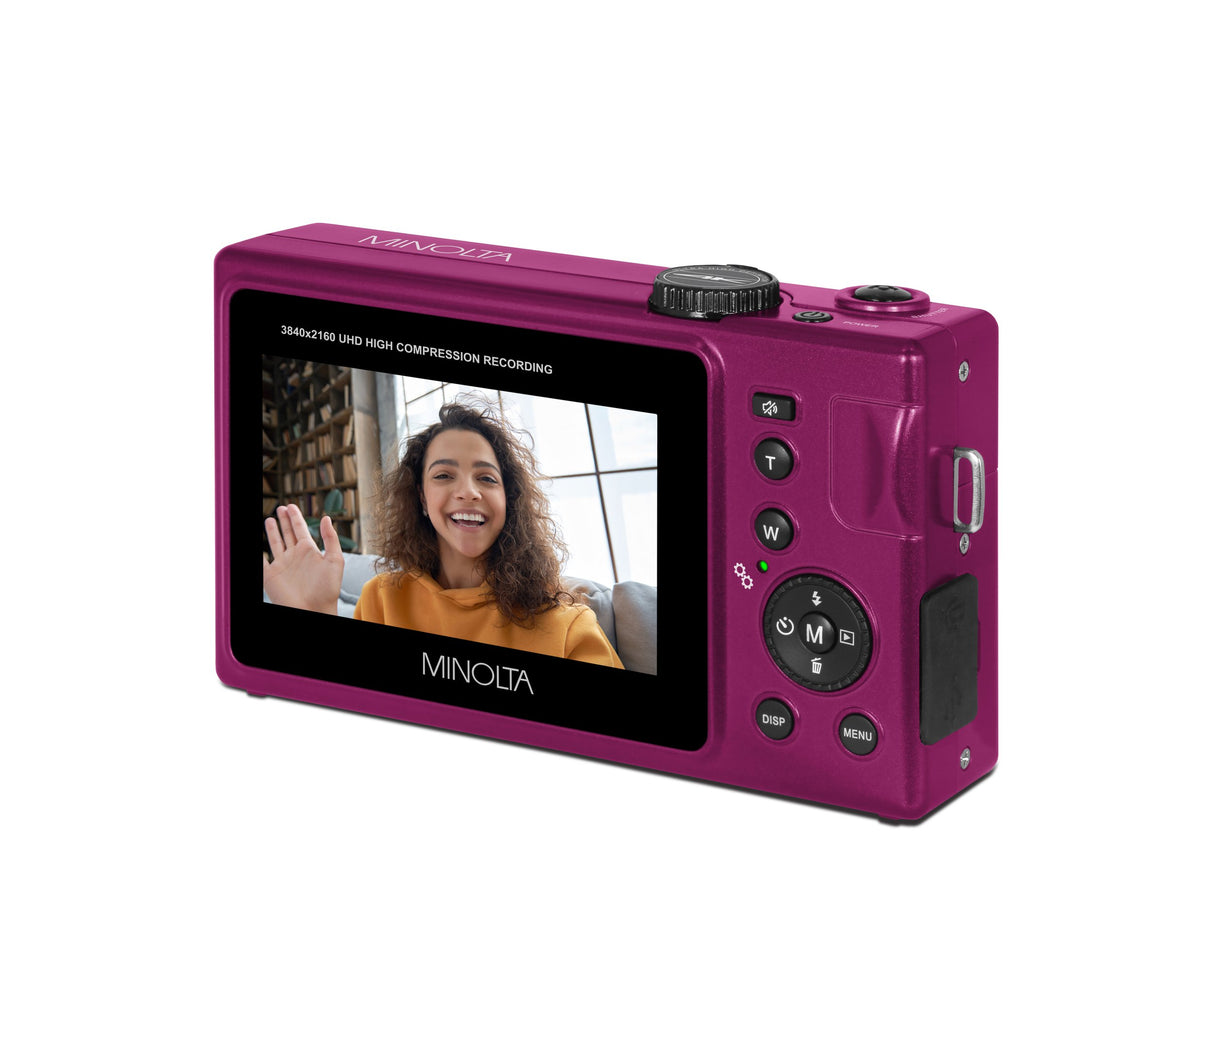 MINOLTA MND25 48 MP Autofocus / 4K Ultra HD Camera w/Selfie Mirror (Magenta)